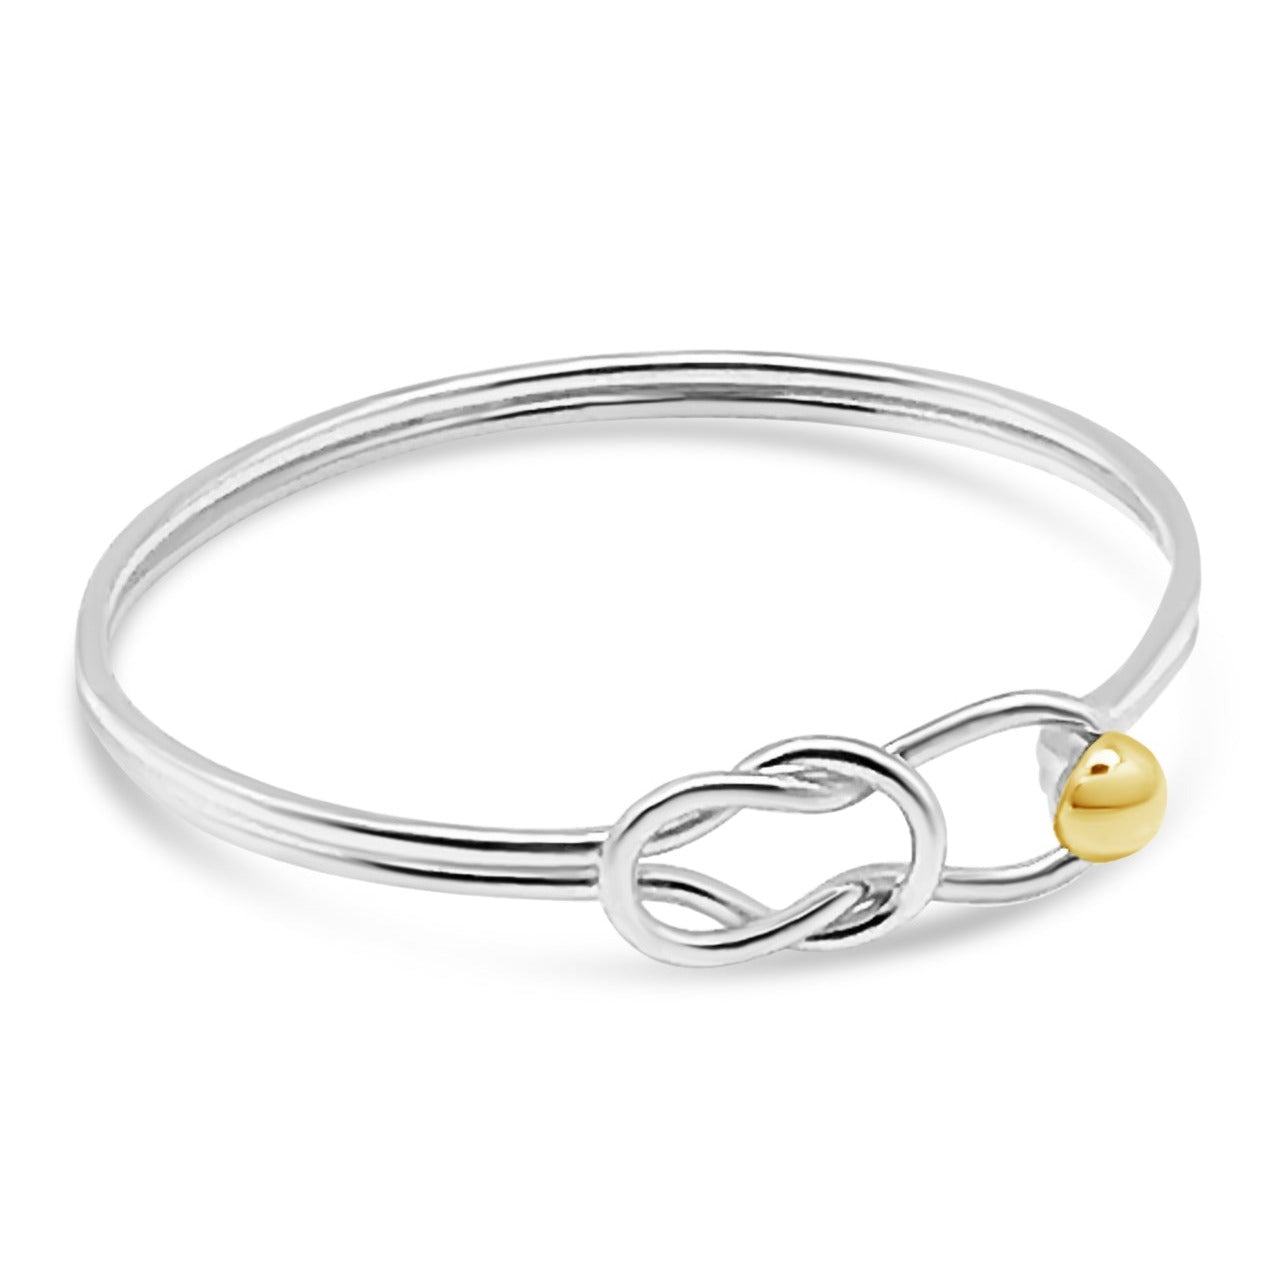 Cape Cod Fisherman's Knot Bracelet - Silver/Rhodium Gold 6.5